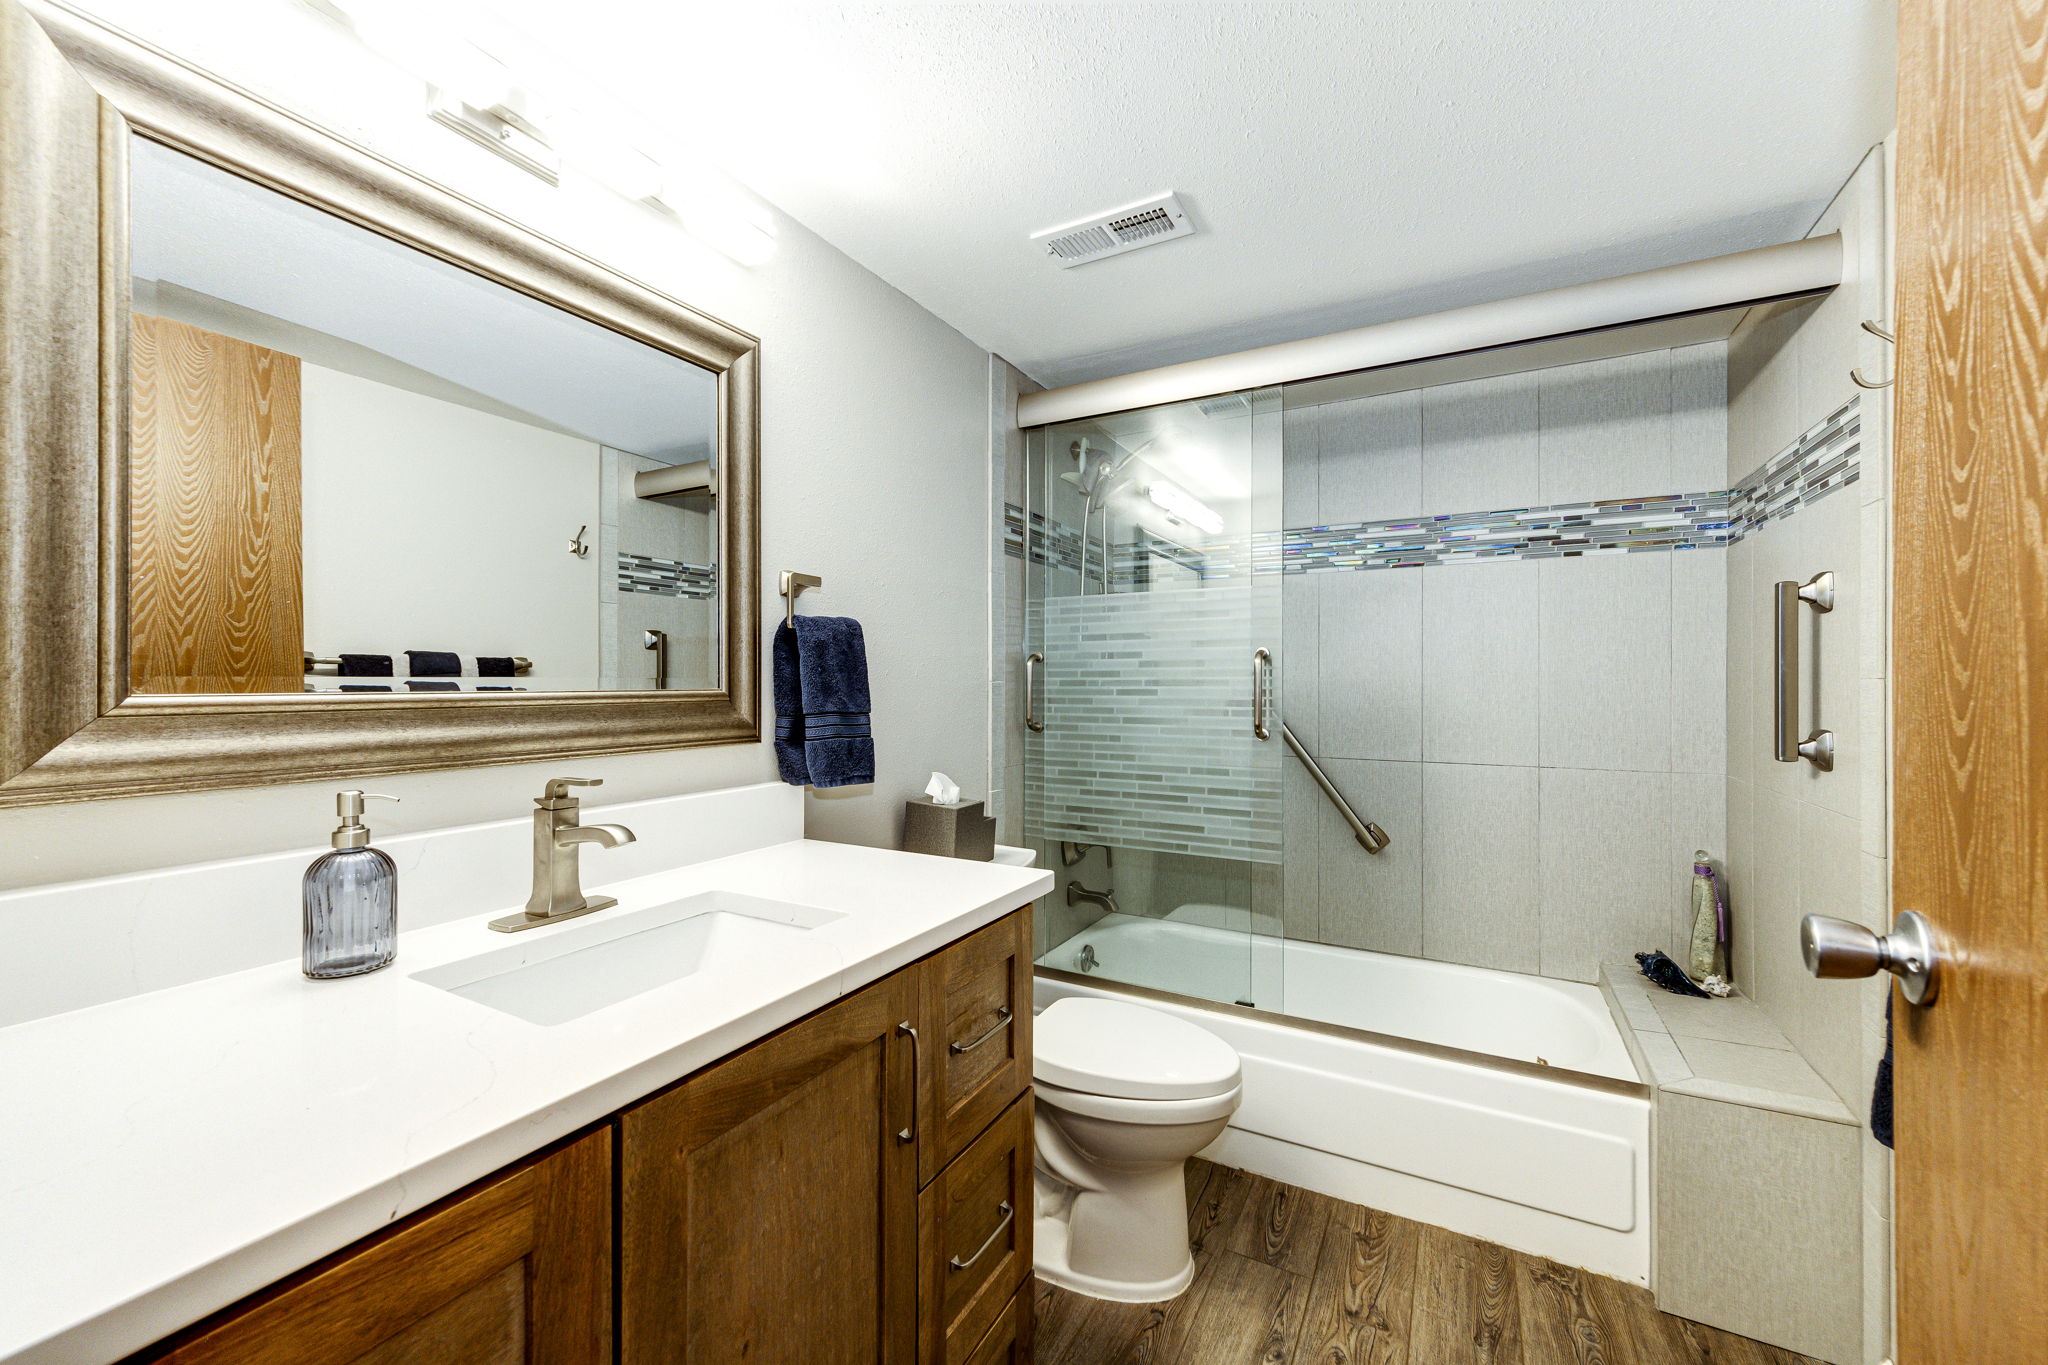 Full bathroom with a gorgeous quartz vanity sink